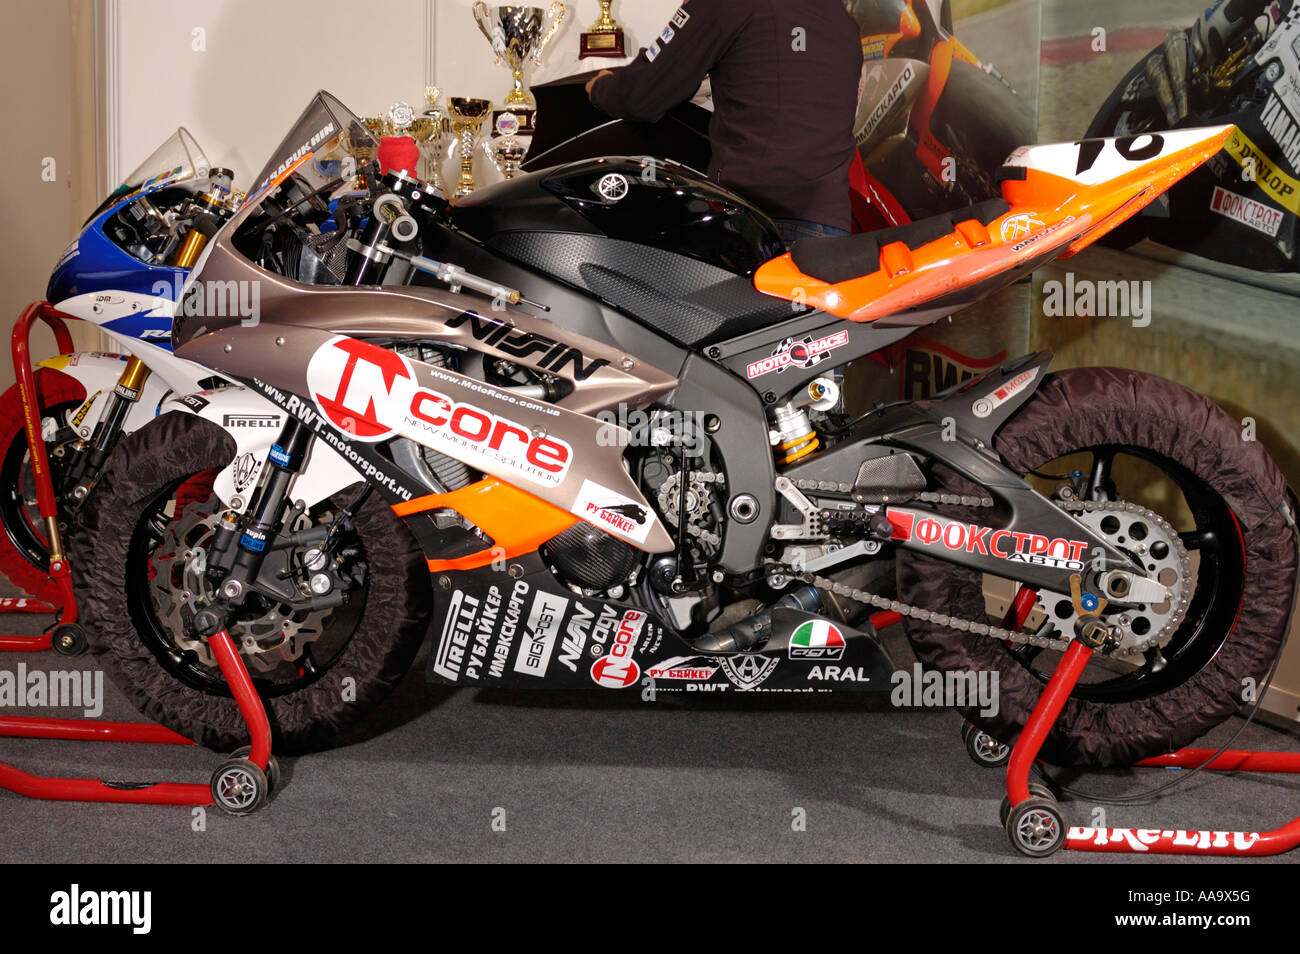 Moto sport team racing Yamaha motorcycles Stock Photo